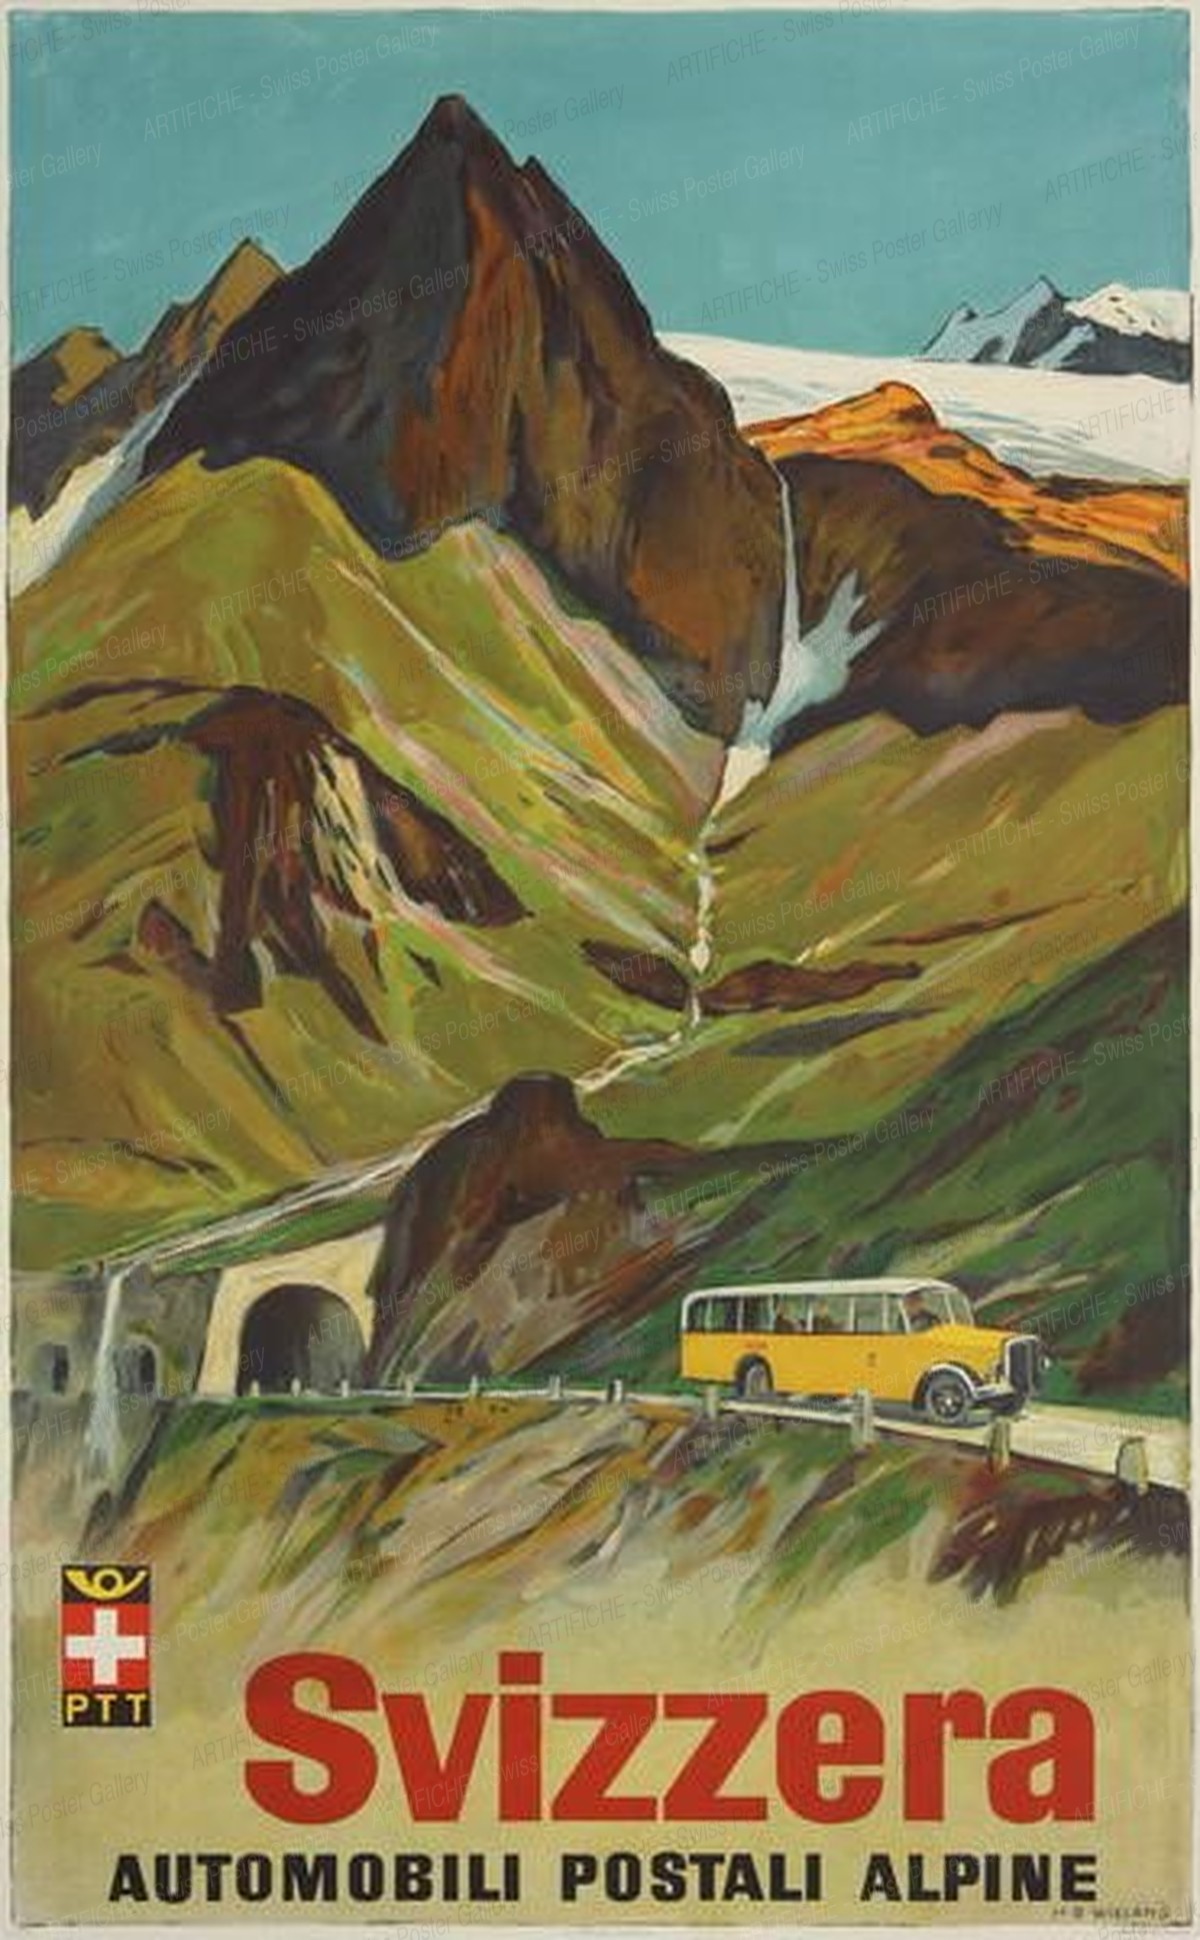 Switzerland – Postbus over the Alps, Hans Beat Wieland